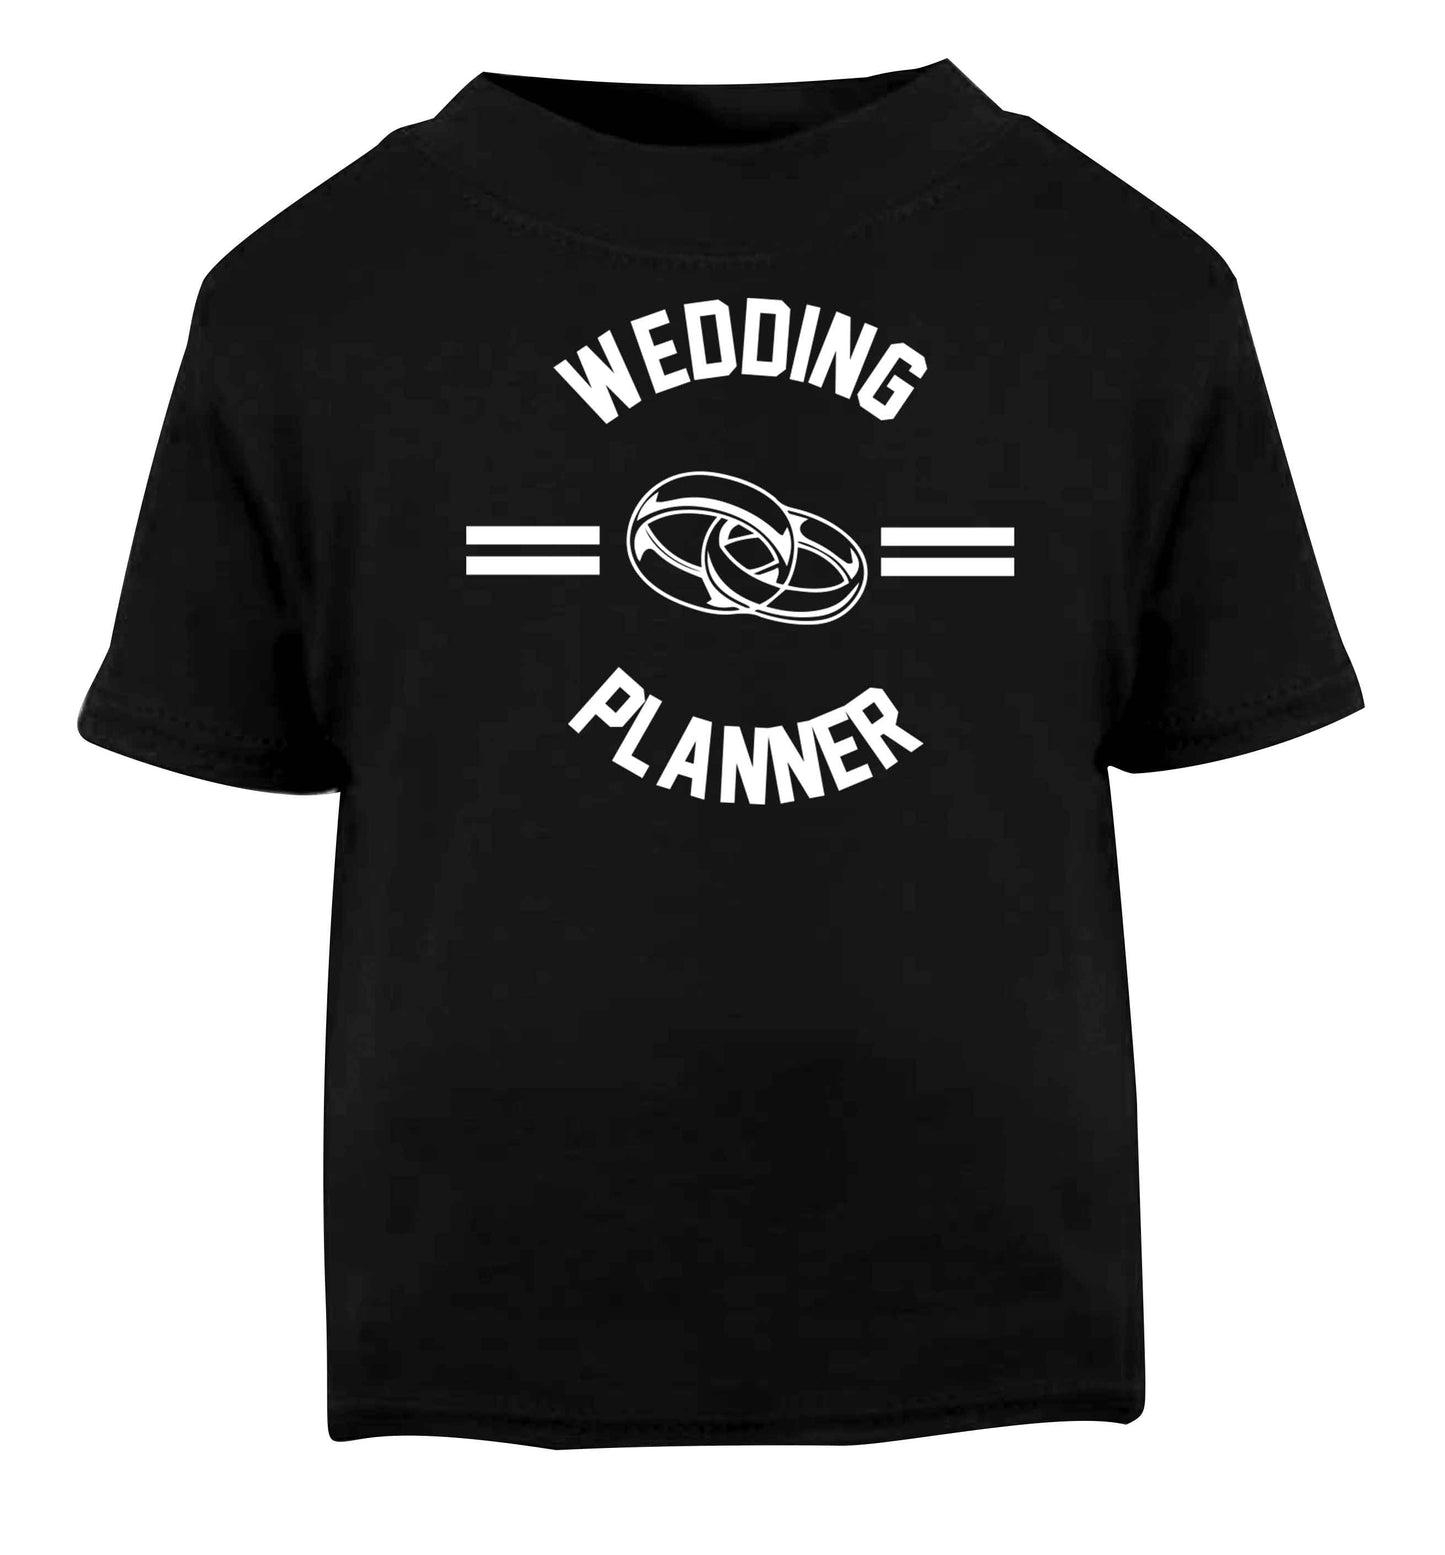 Wedding planner Black baby toddler Tshirt 2 years